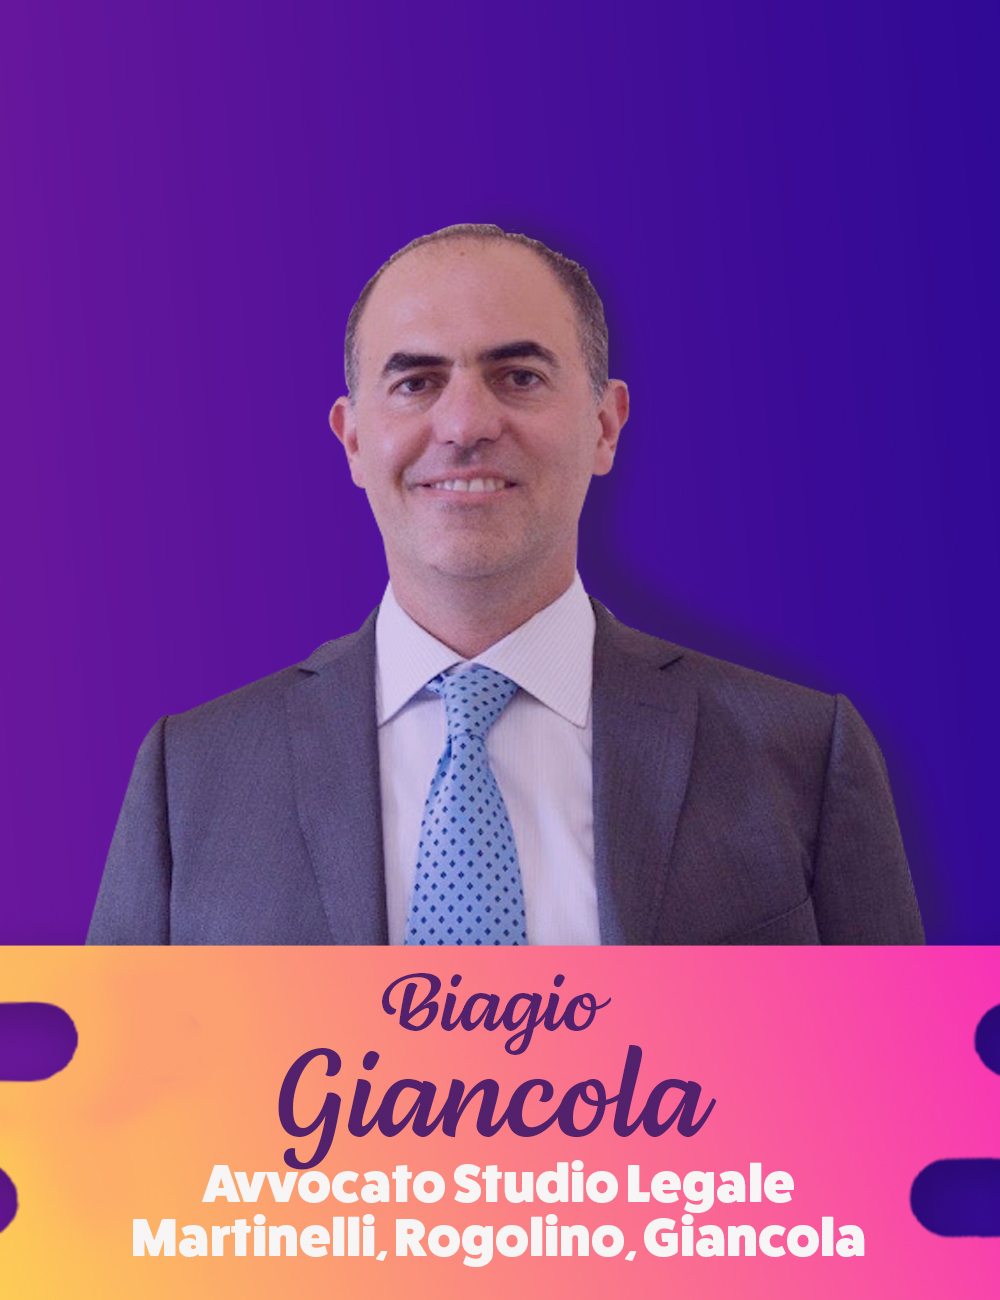 Biagio Giancola copia